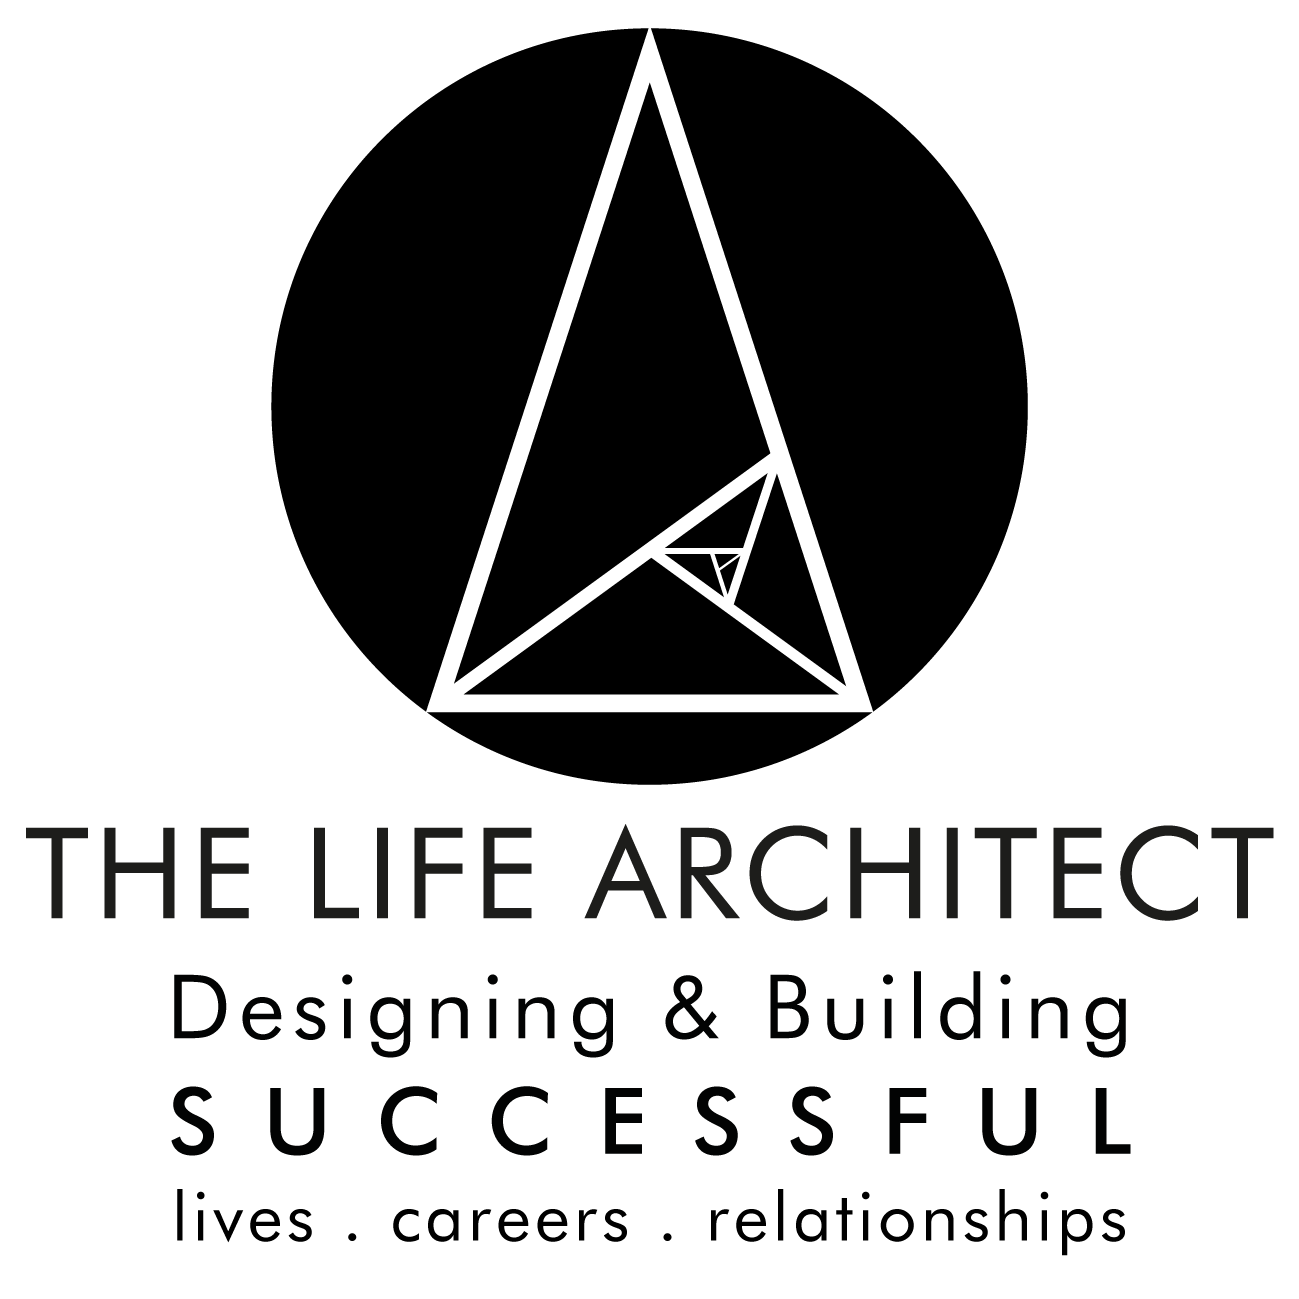 THE LIFE ARCHITECT